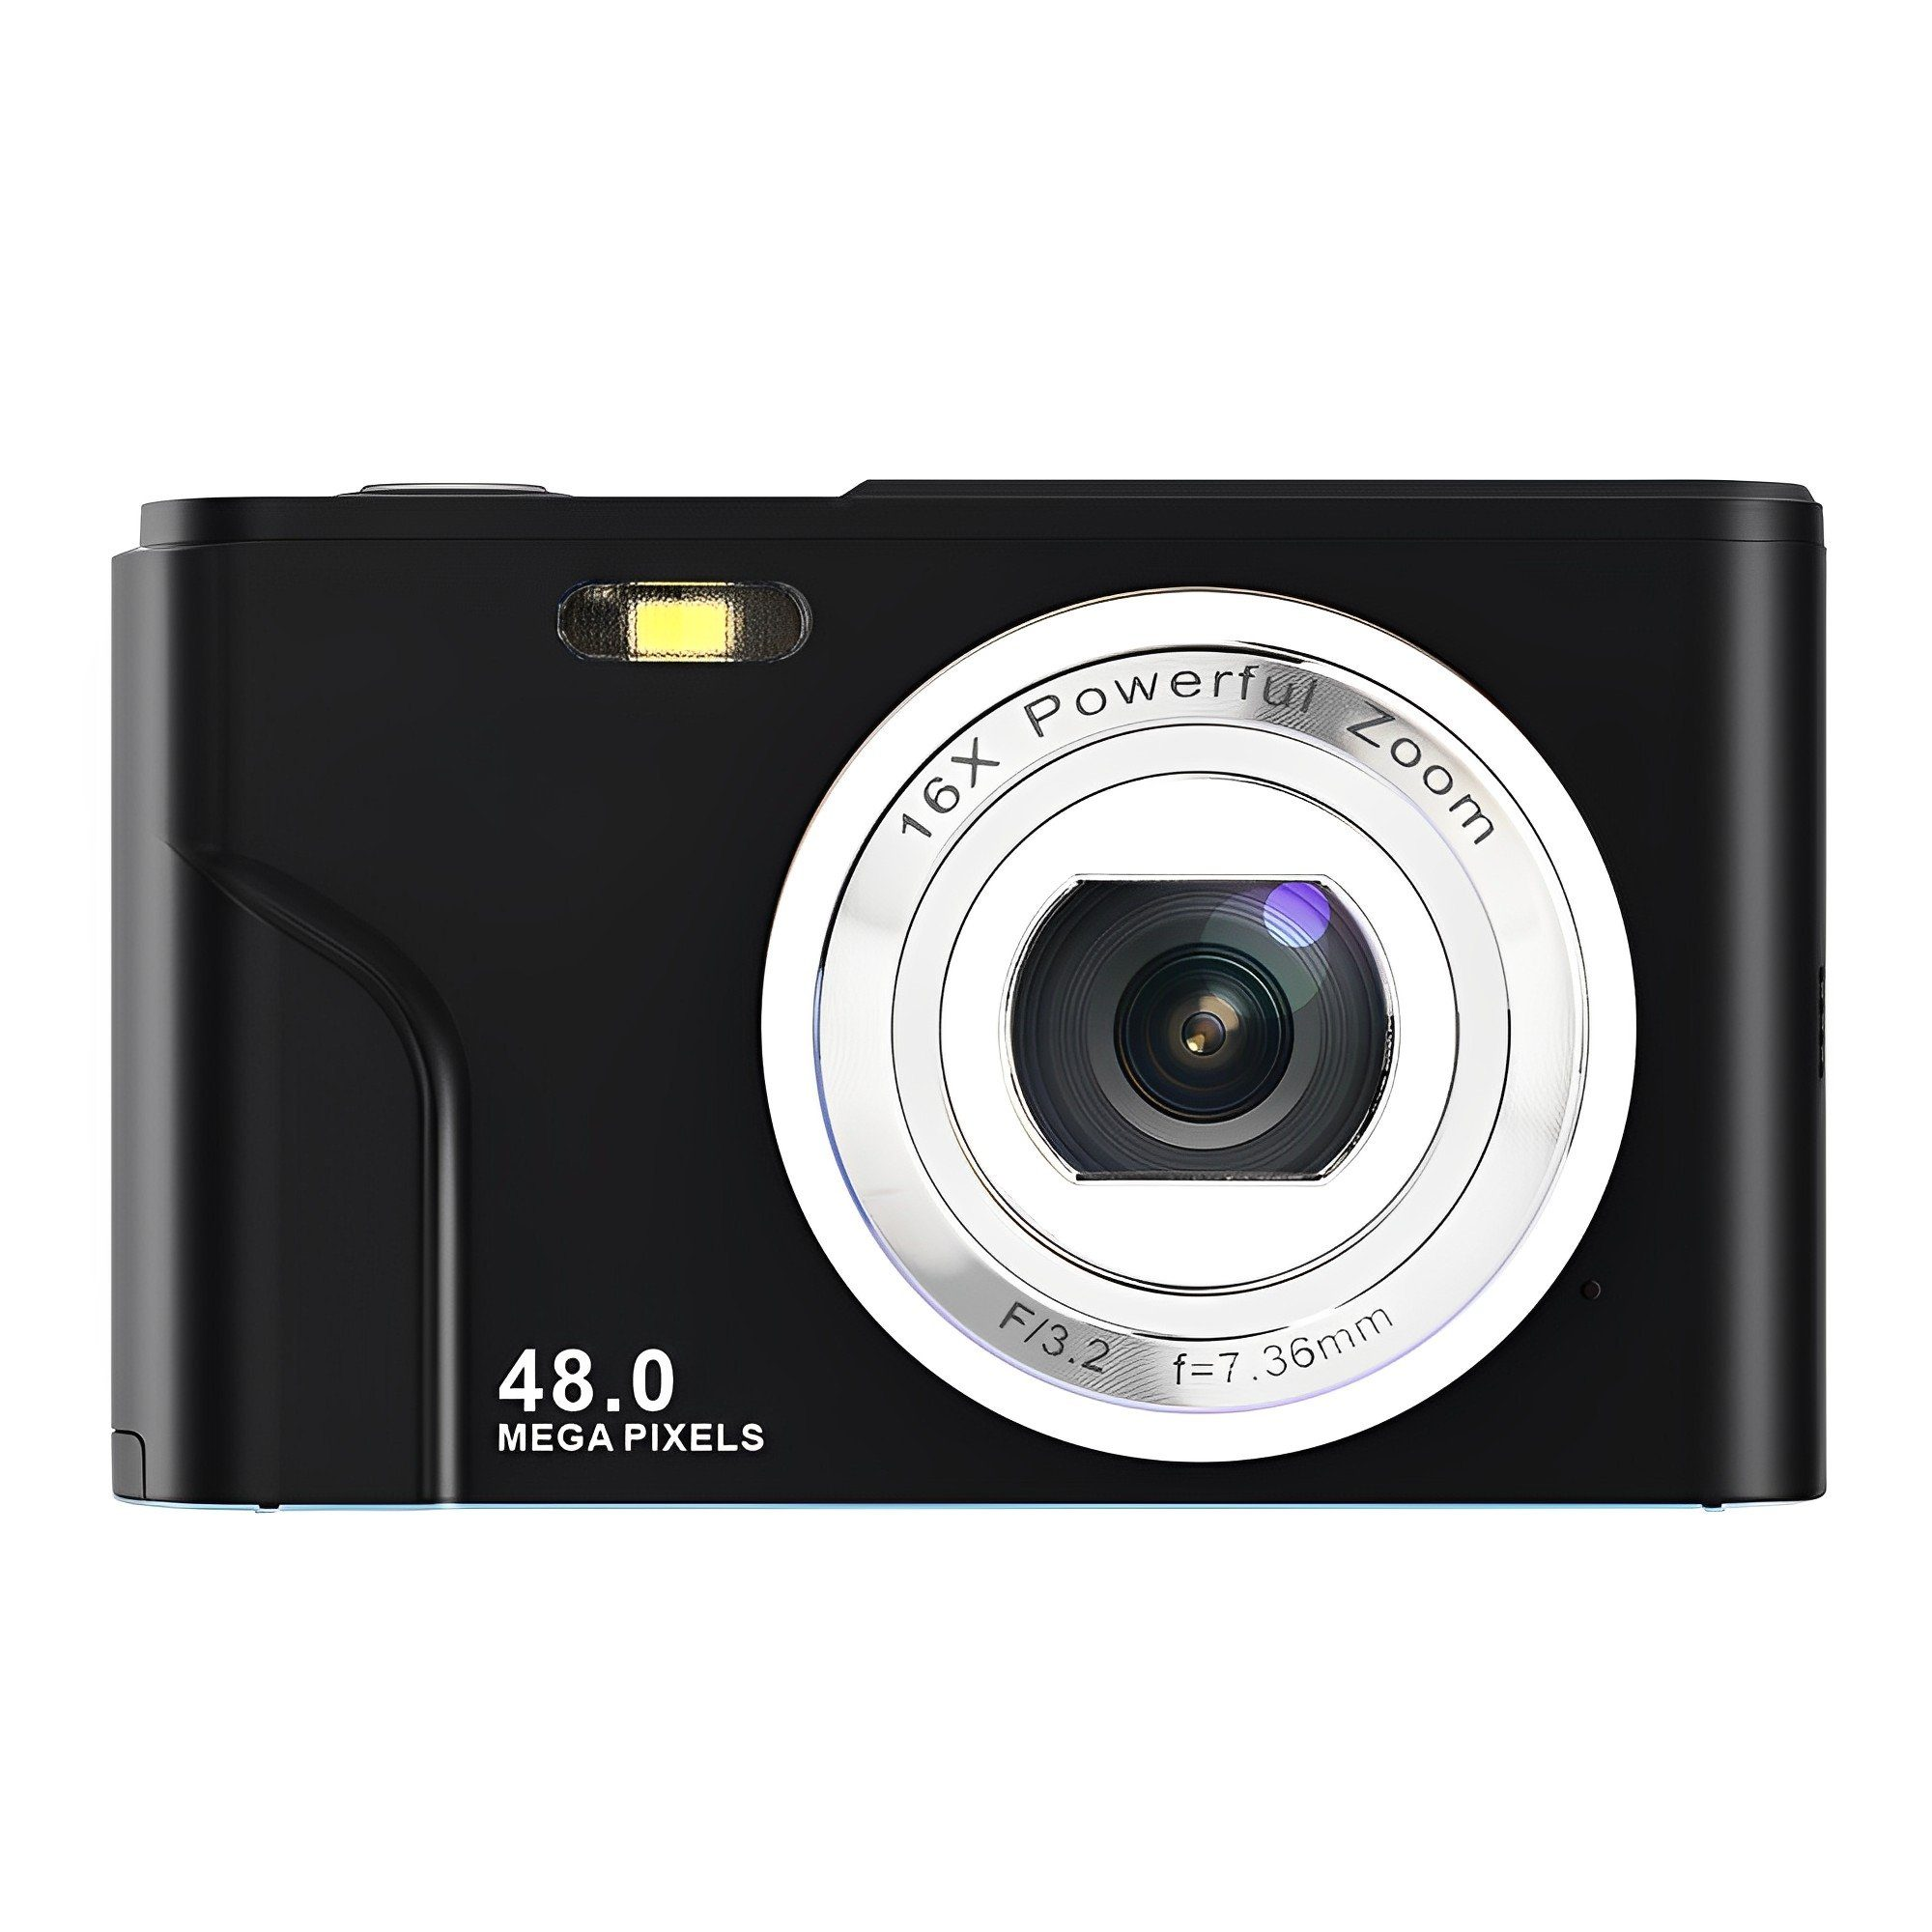 Digitalkameras SYNTEK megapixel,Digitalkamera ,Zoomobjektiv-Schwarz HD-Bildschirme Schwarz, Kompaktkamera,48